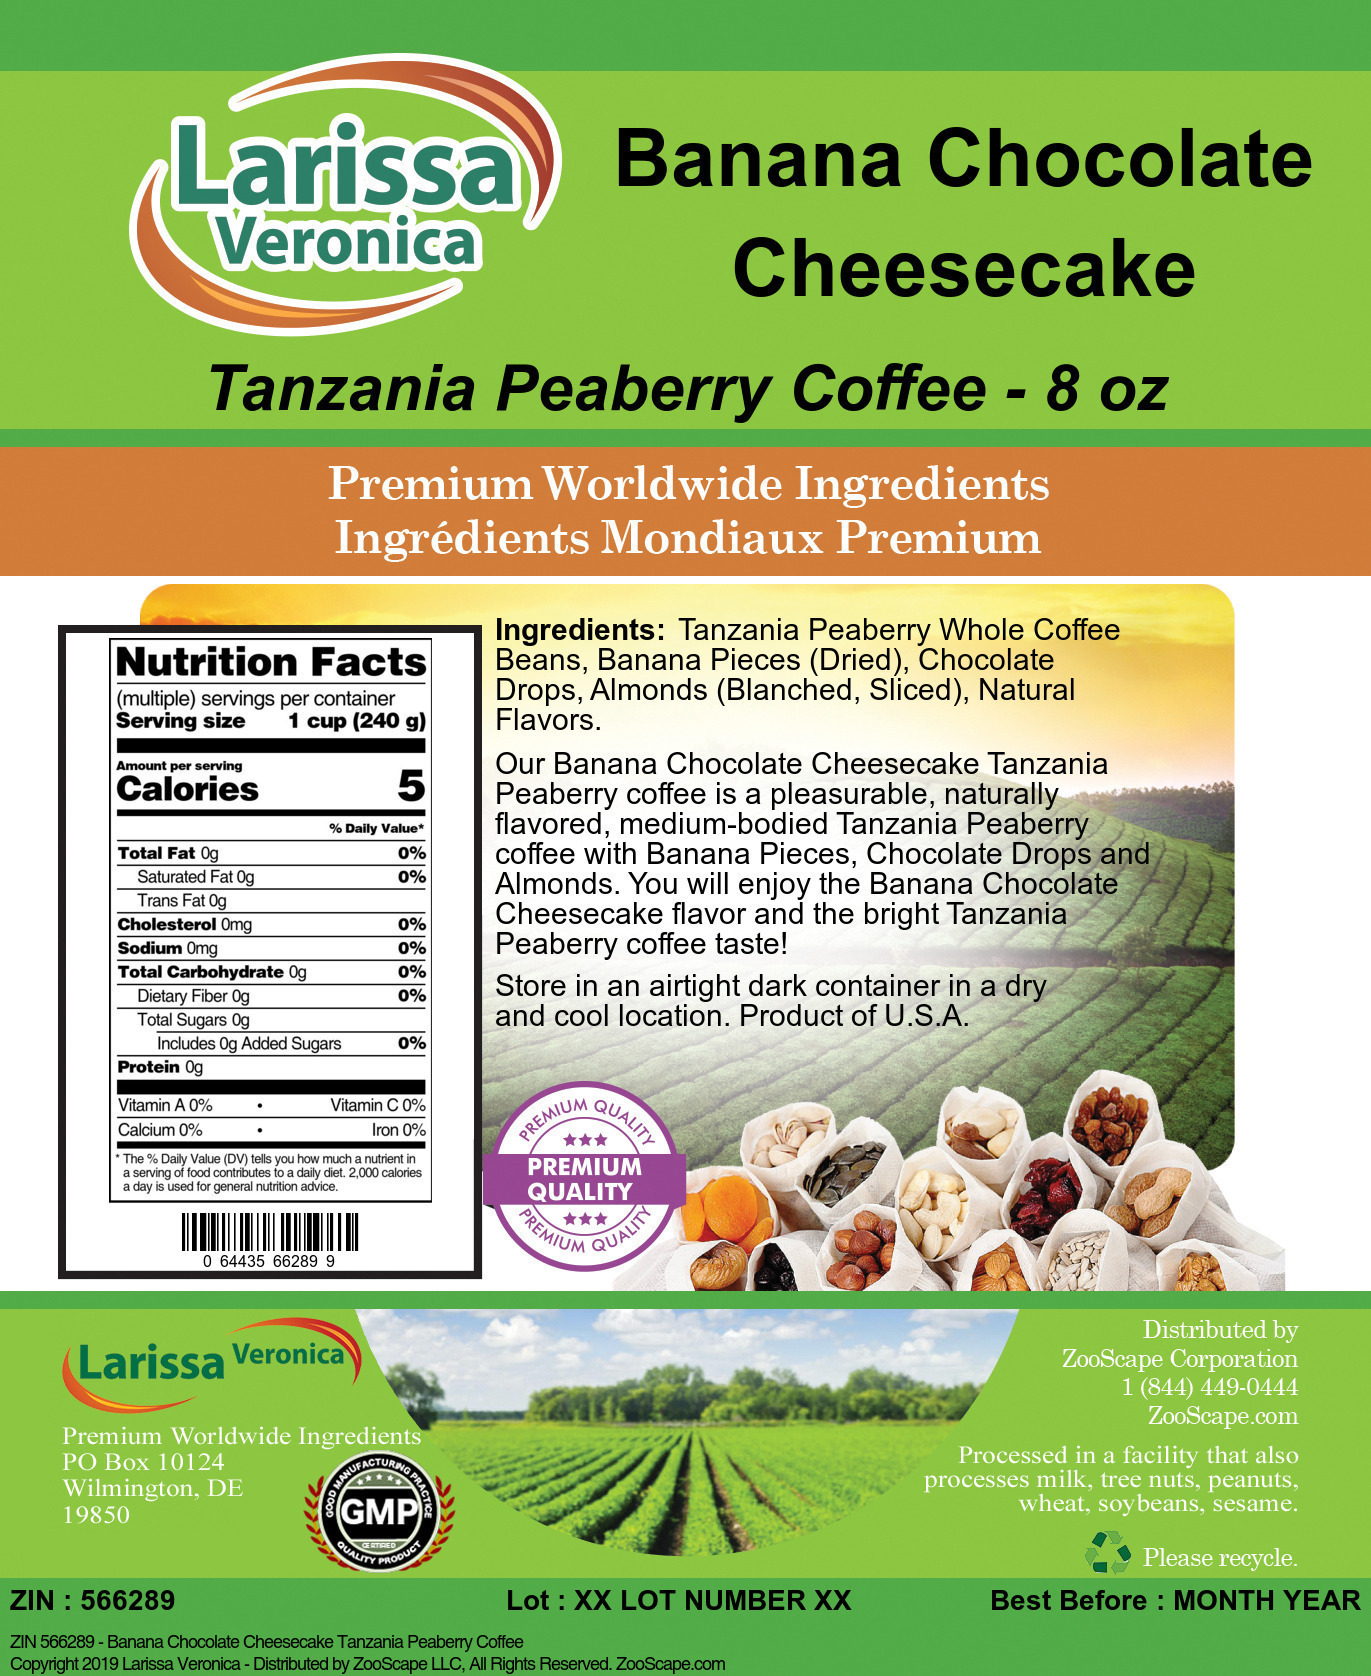 Banana Chocolate Cheesecake Tanzania Peaberry Coffee - Label